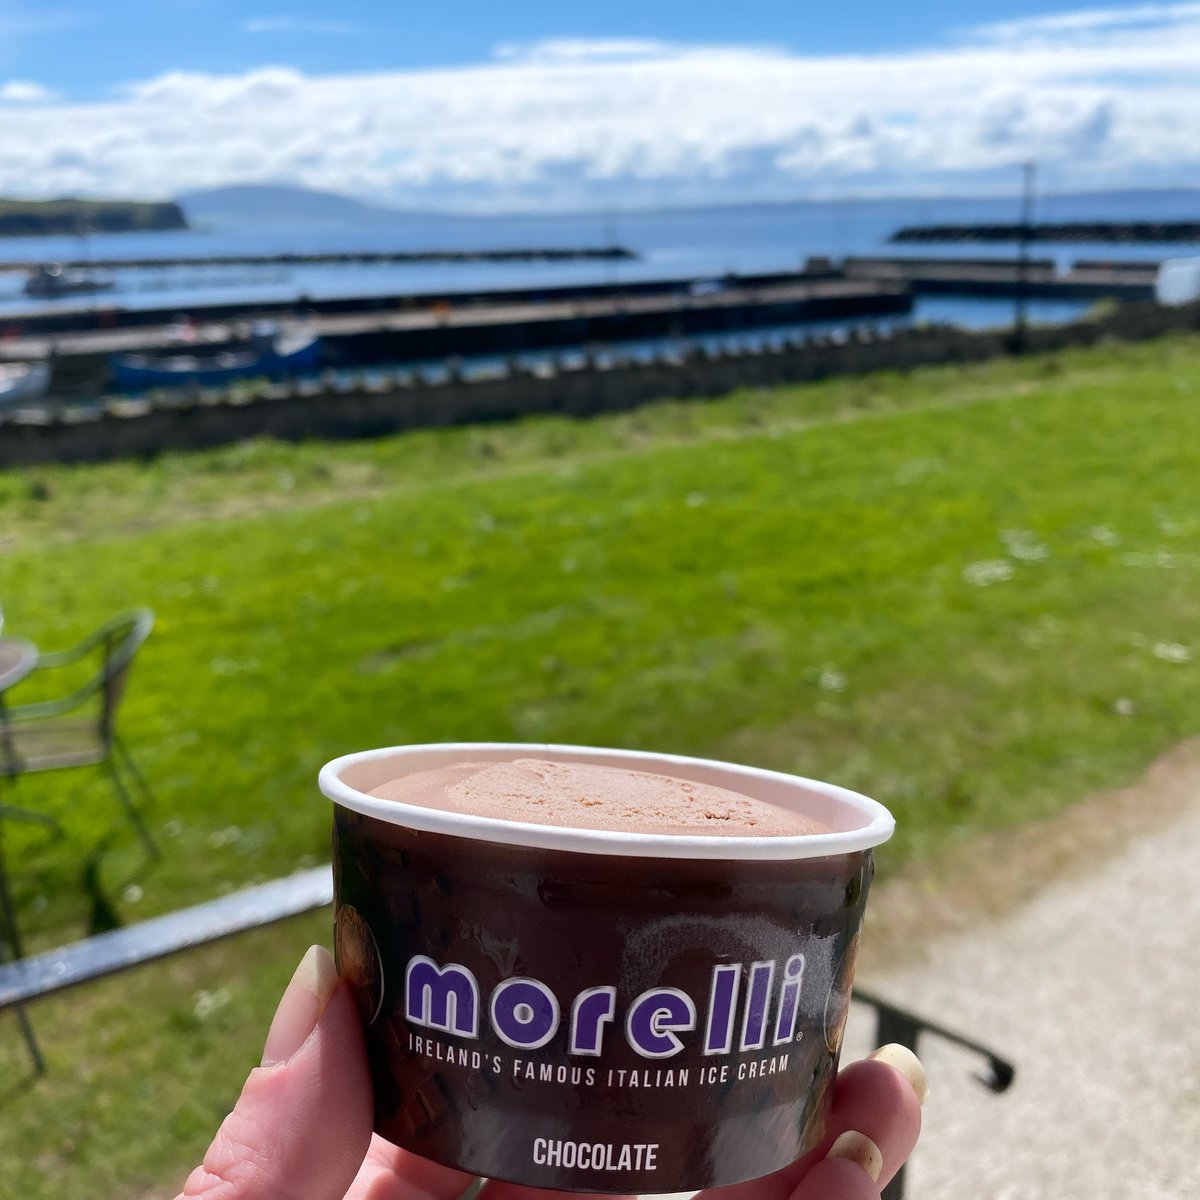 Perfect day for a @morelliicecream  here on Rathlin ☀️🍦
.
.
#icecream #chocolateicecream #icecreamweather #localicecream #sunshine #shoplocal #supportlocal #islandshop #islandcooperative #rathlinisland